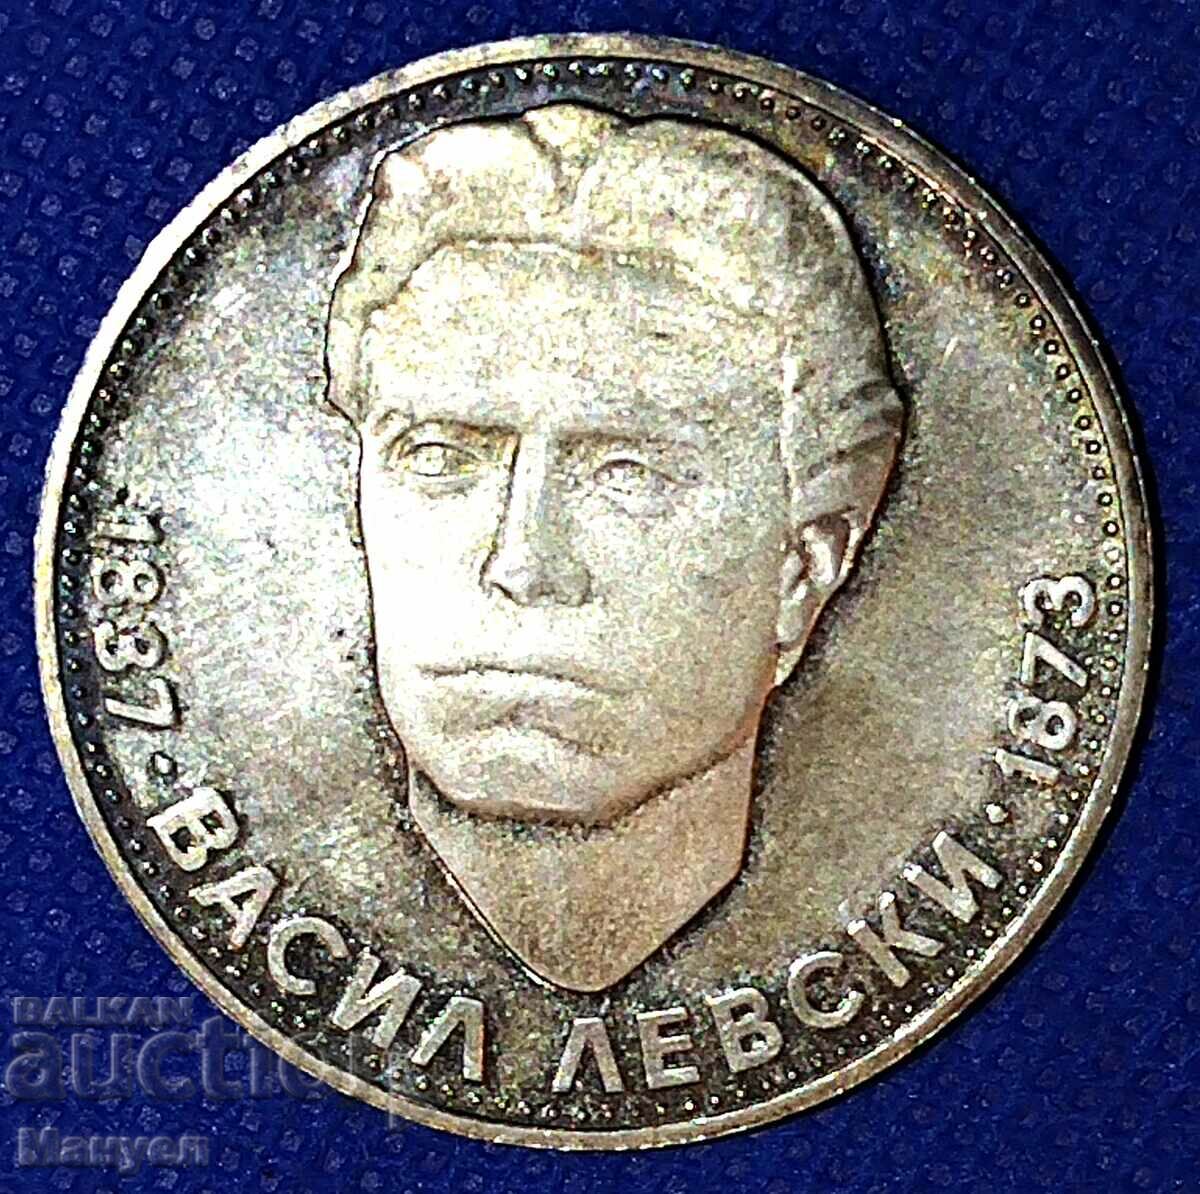 5 лева сребро -  1973 г.